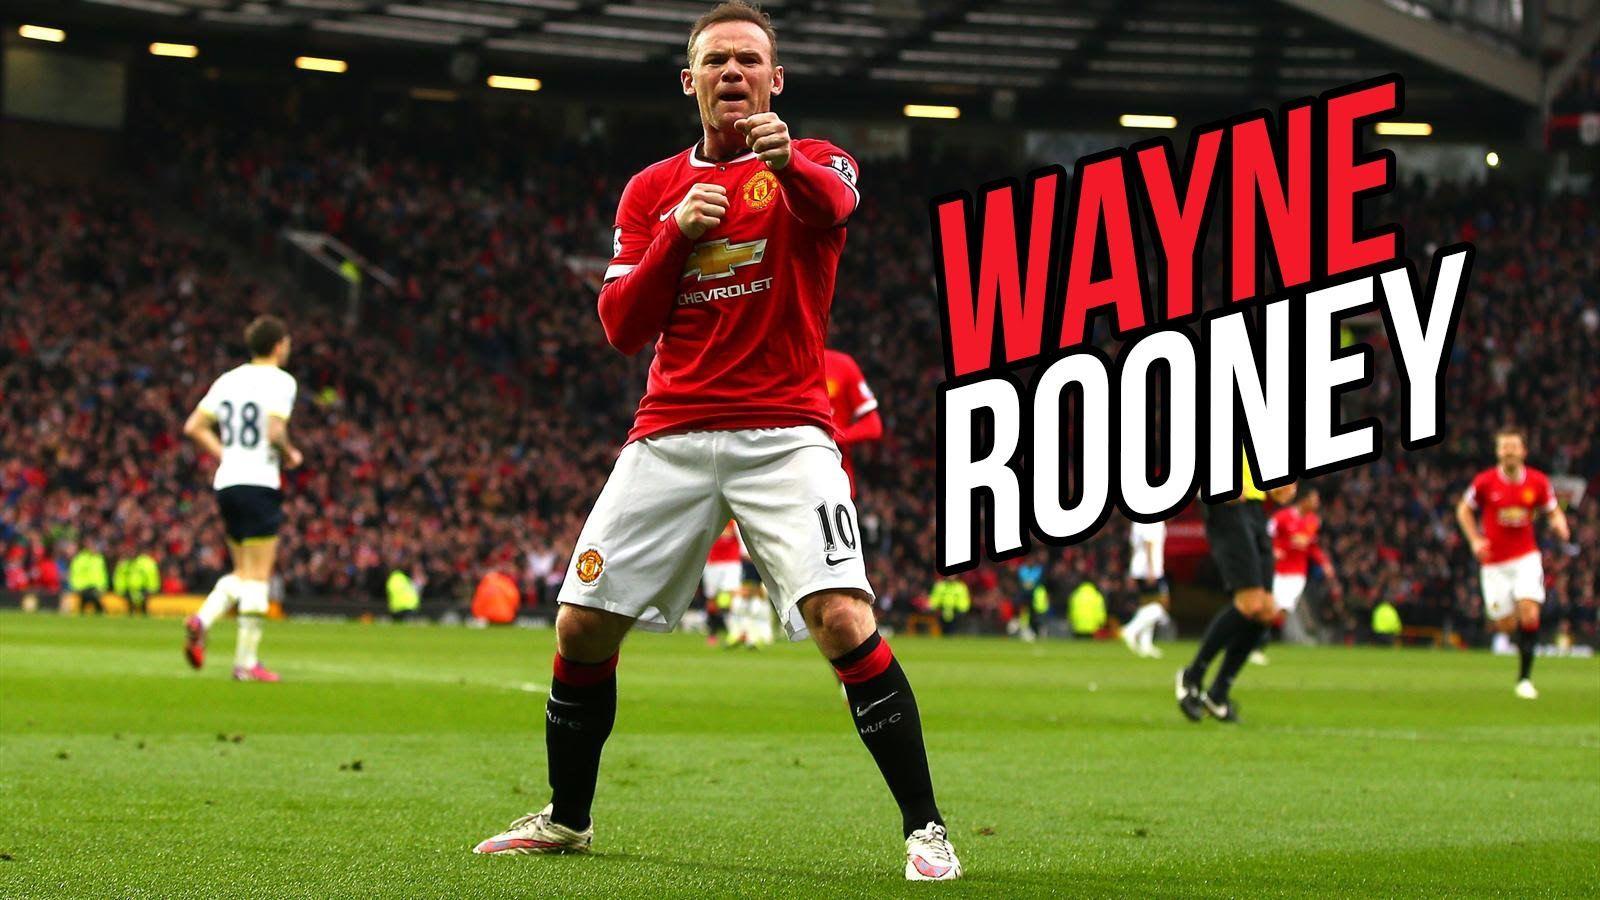 Wayne Rooney HD Image, Get Free top quality Wayne Rooney HD Image